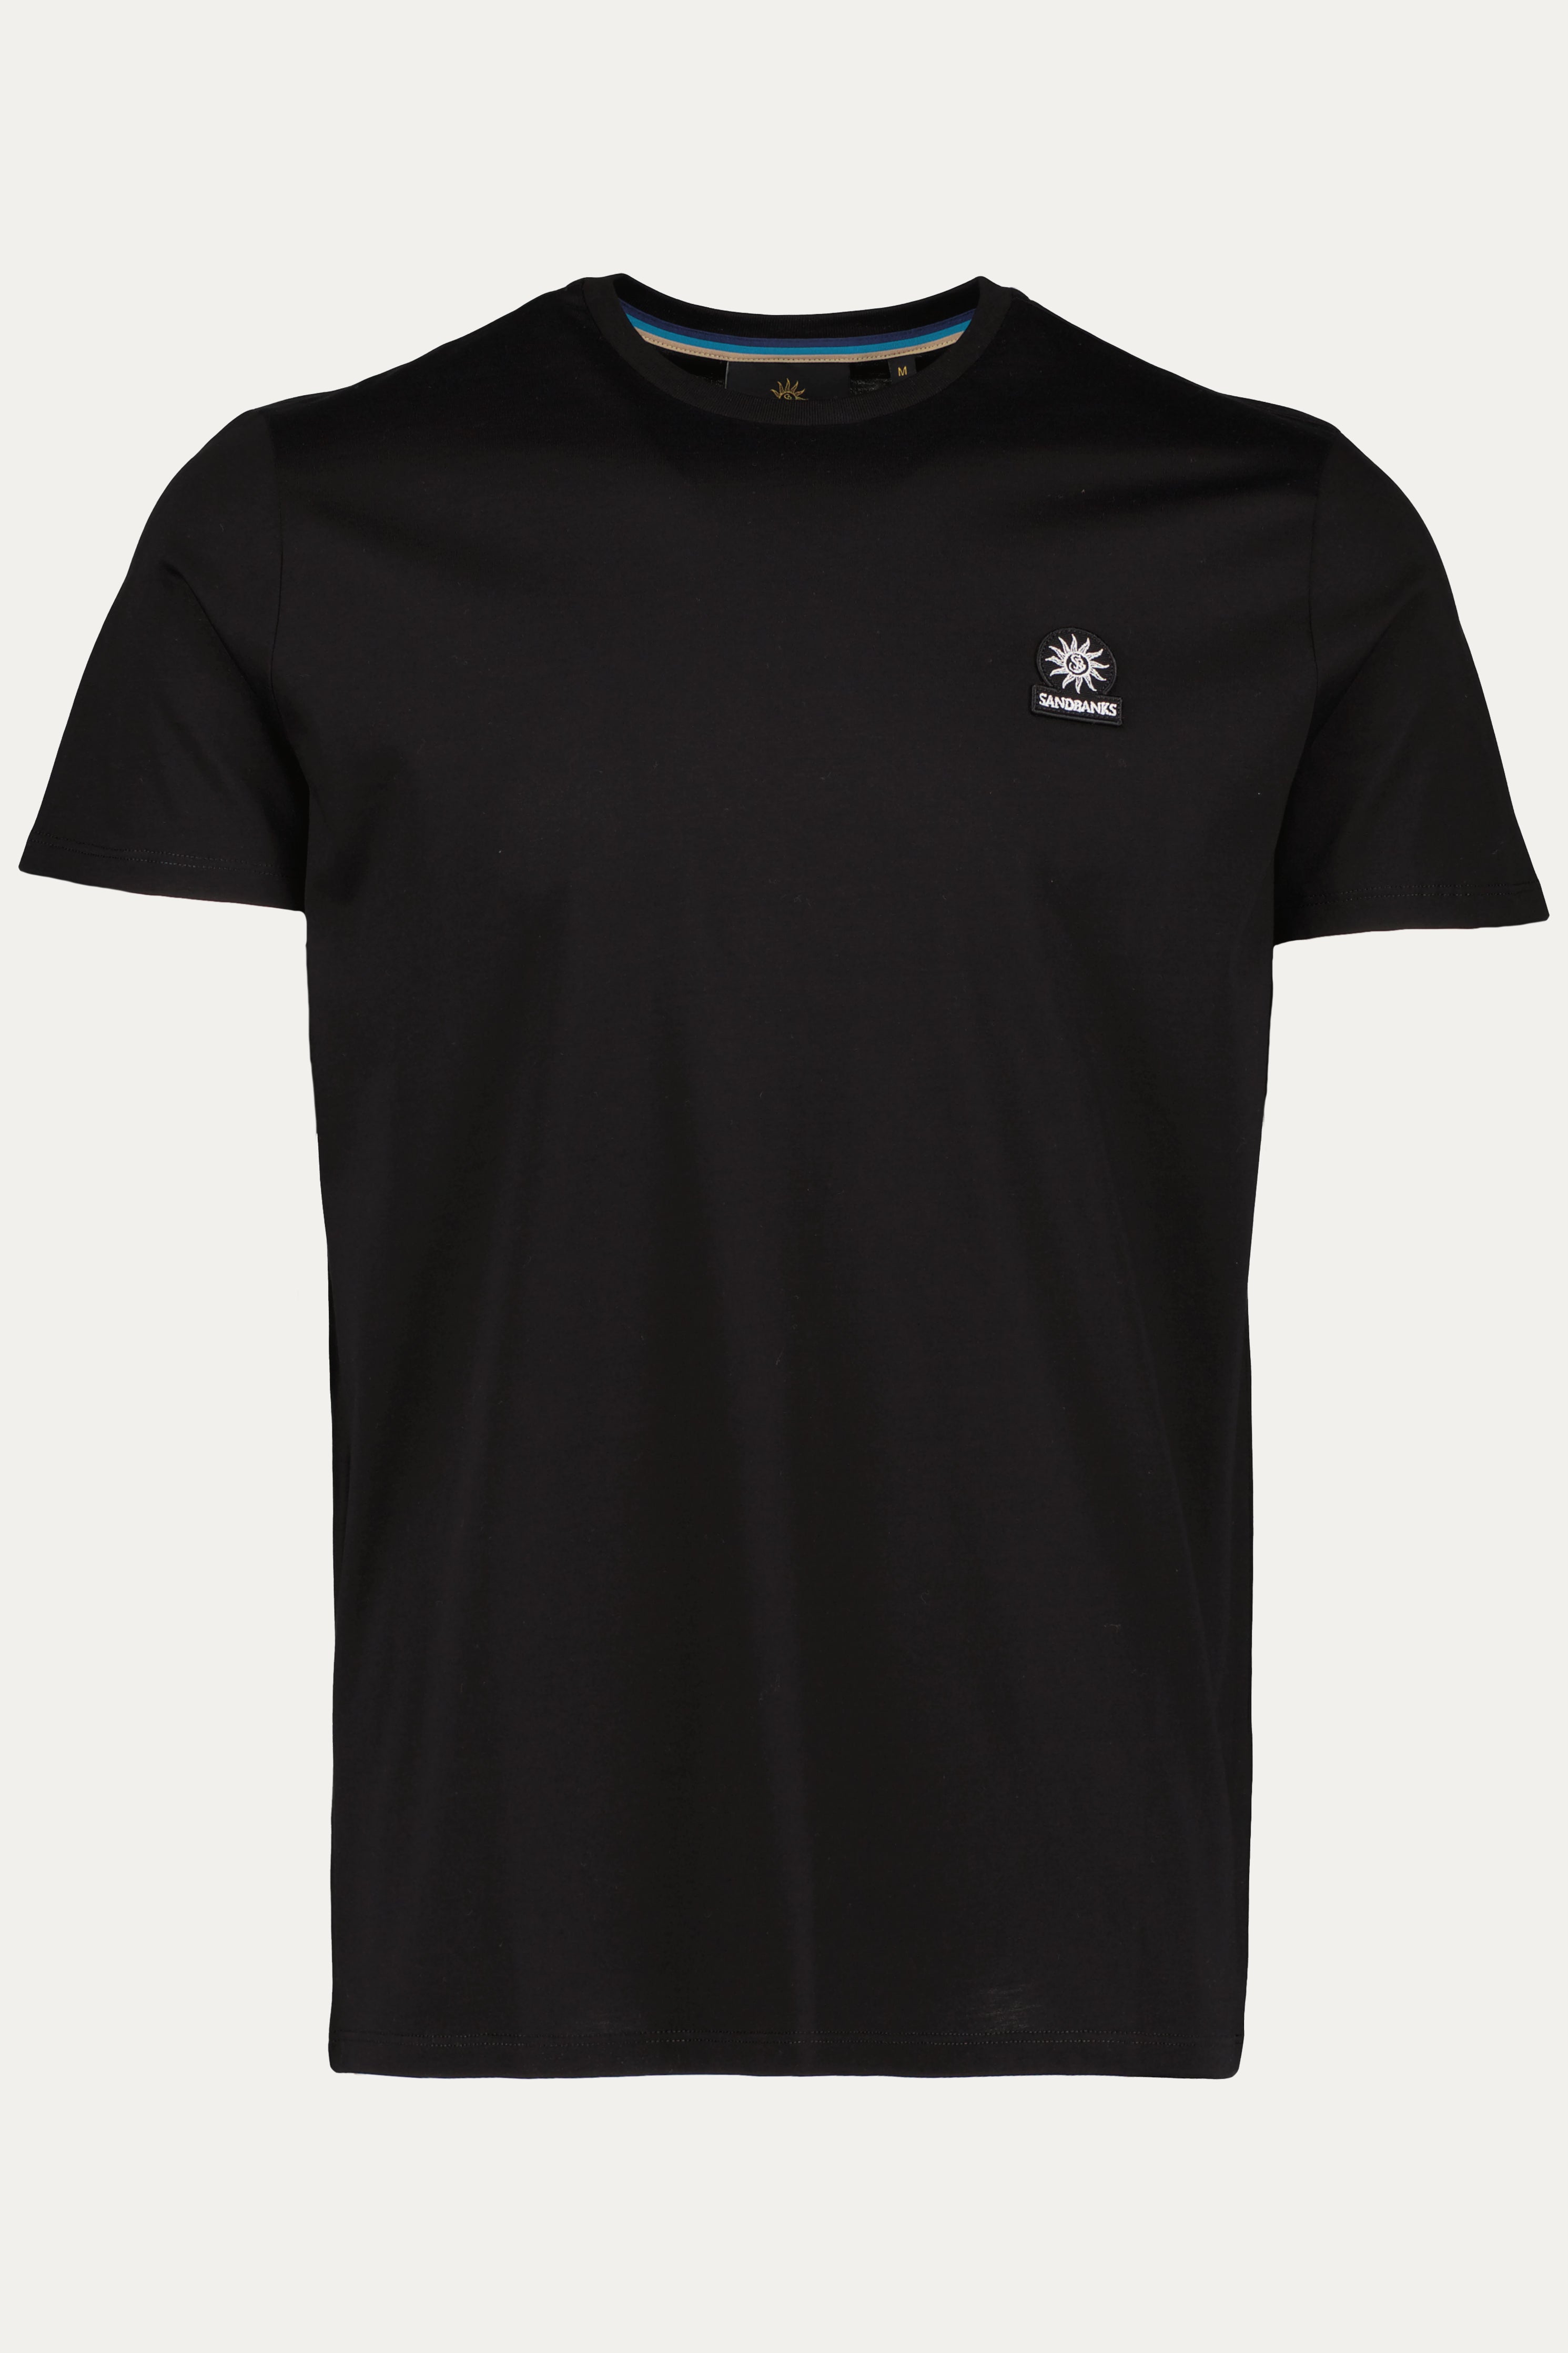 Men's Sandbanks Badge Logo Black T Shirt